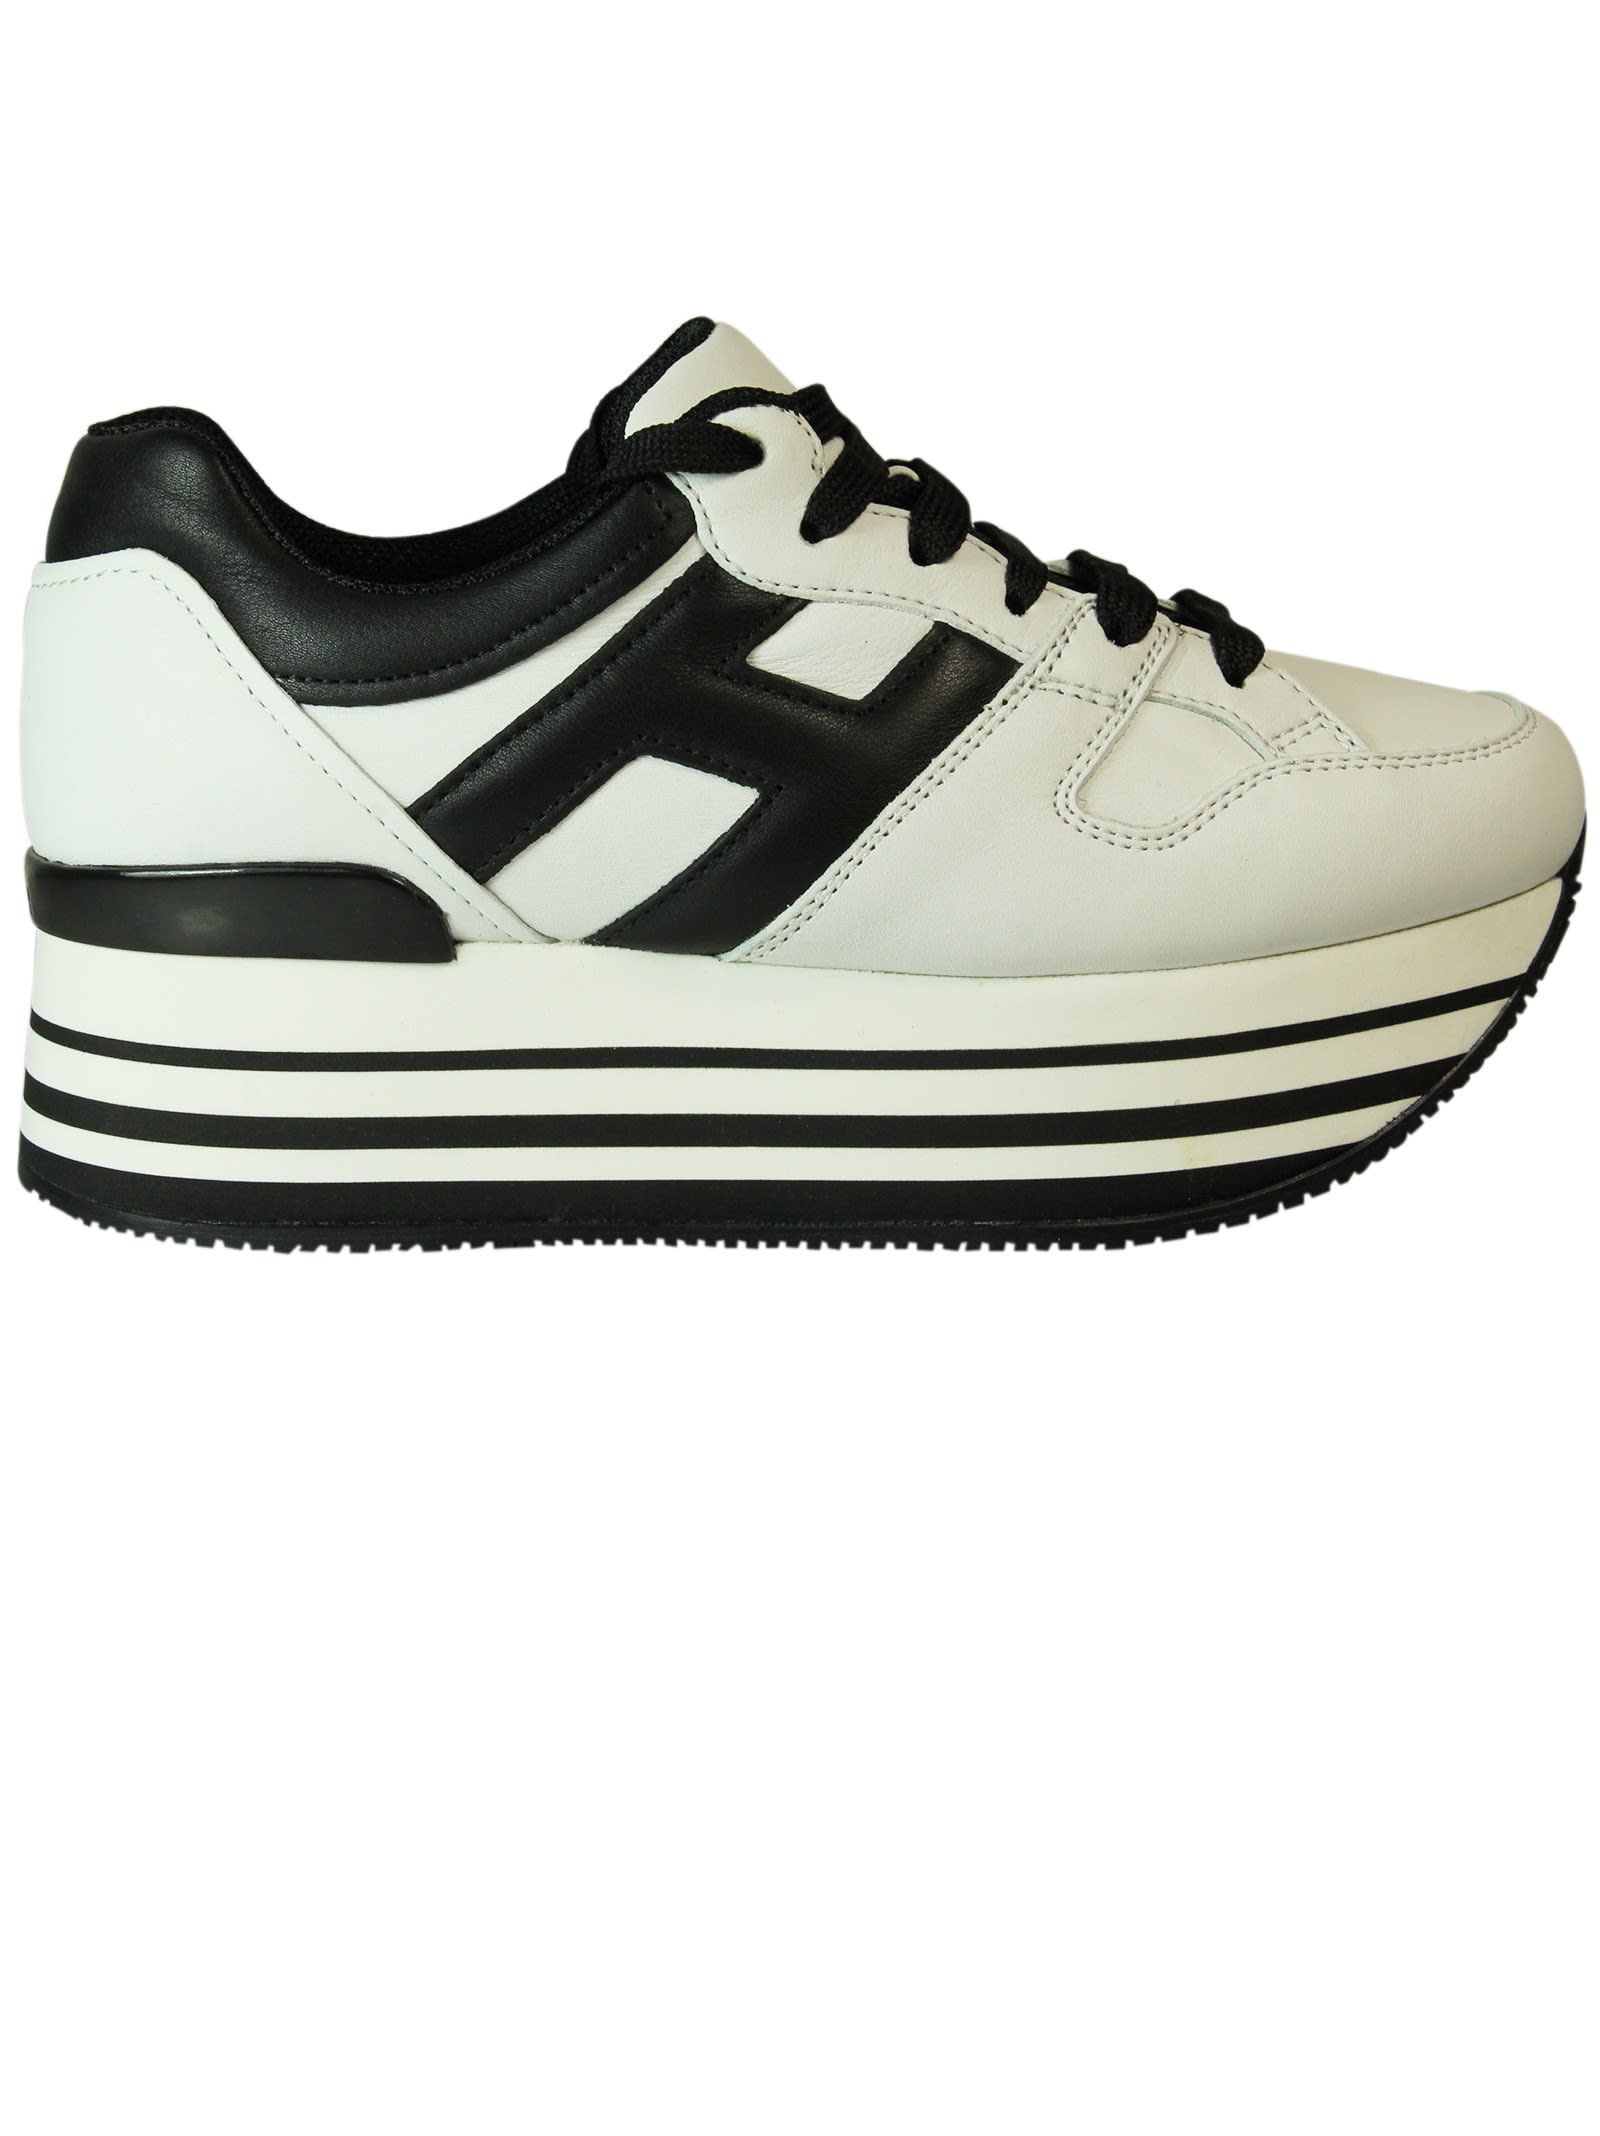 Hogan 70Mm Sportivo Leather Platform Sneakers, White/Black | ModeSens